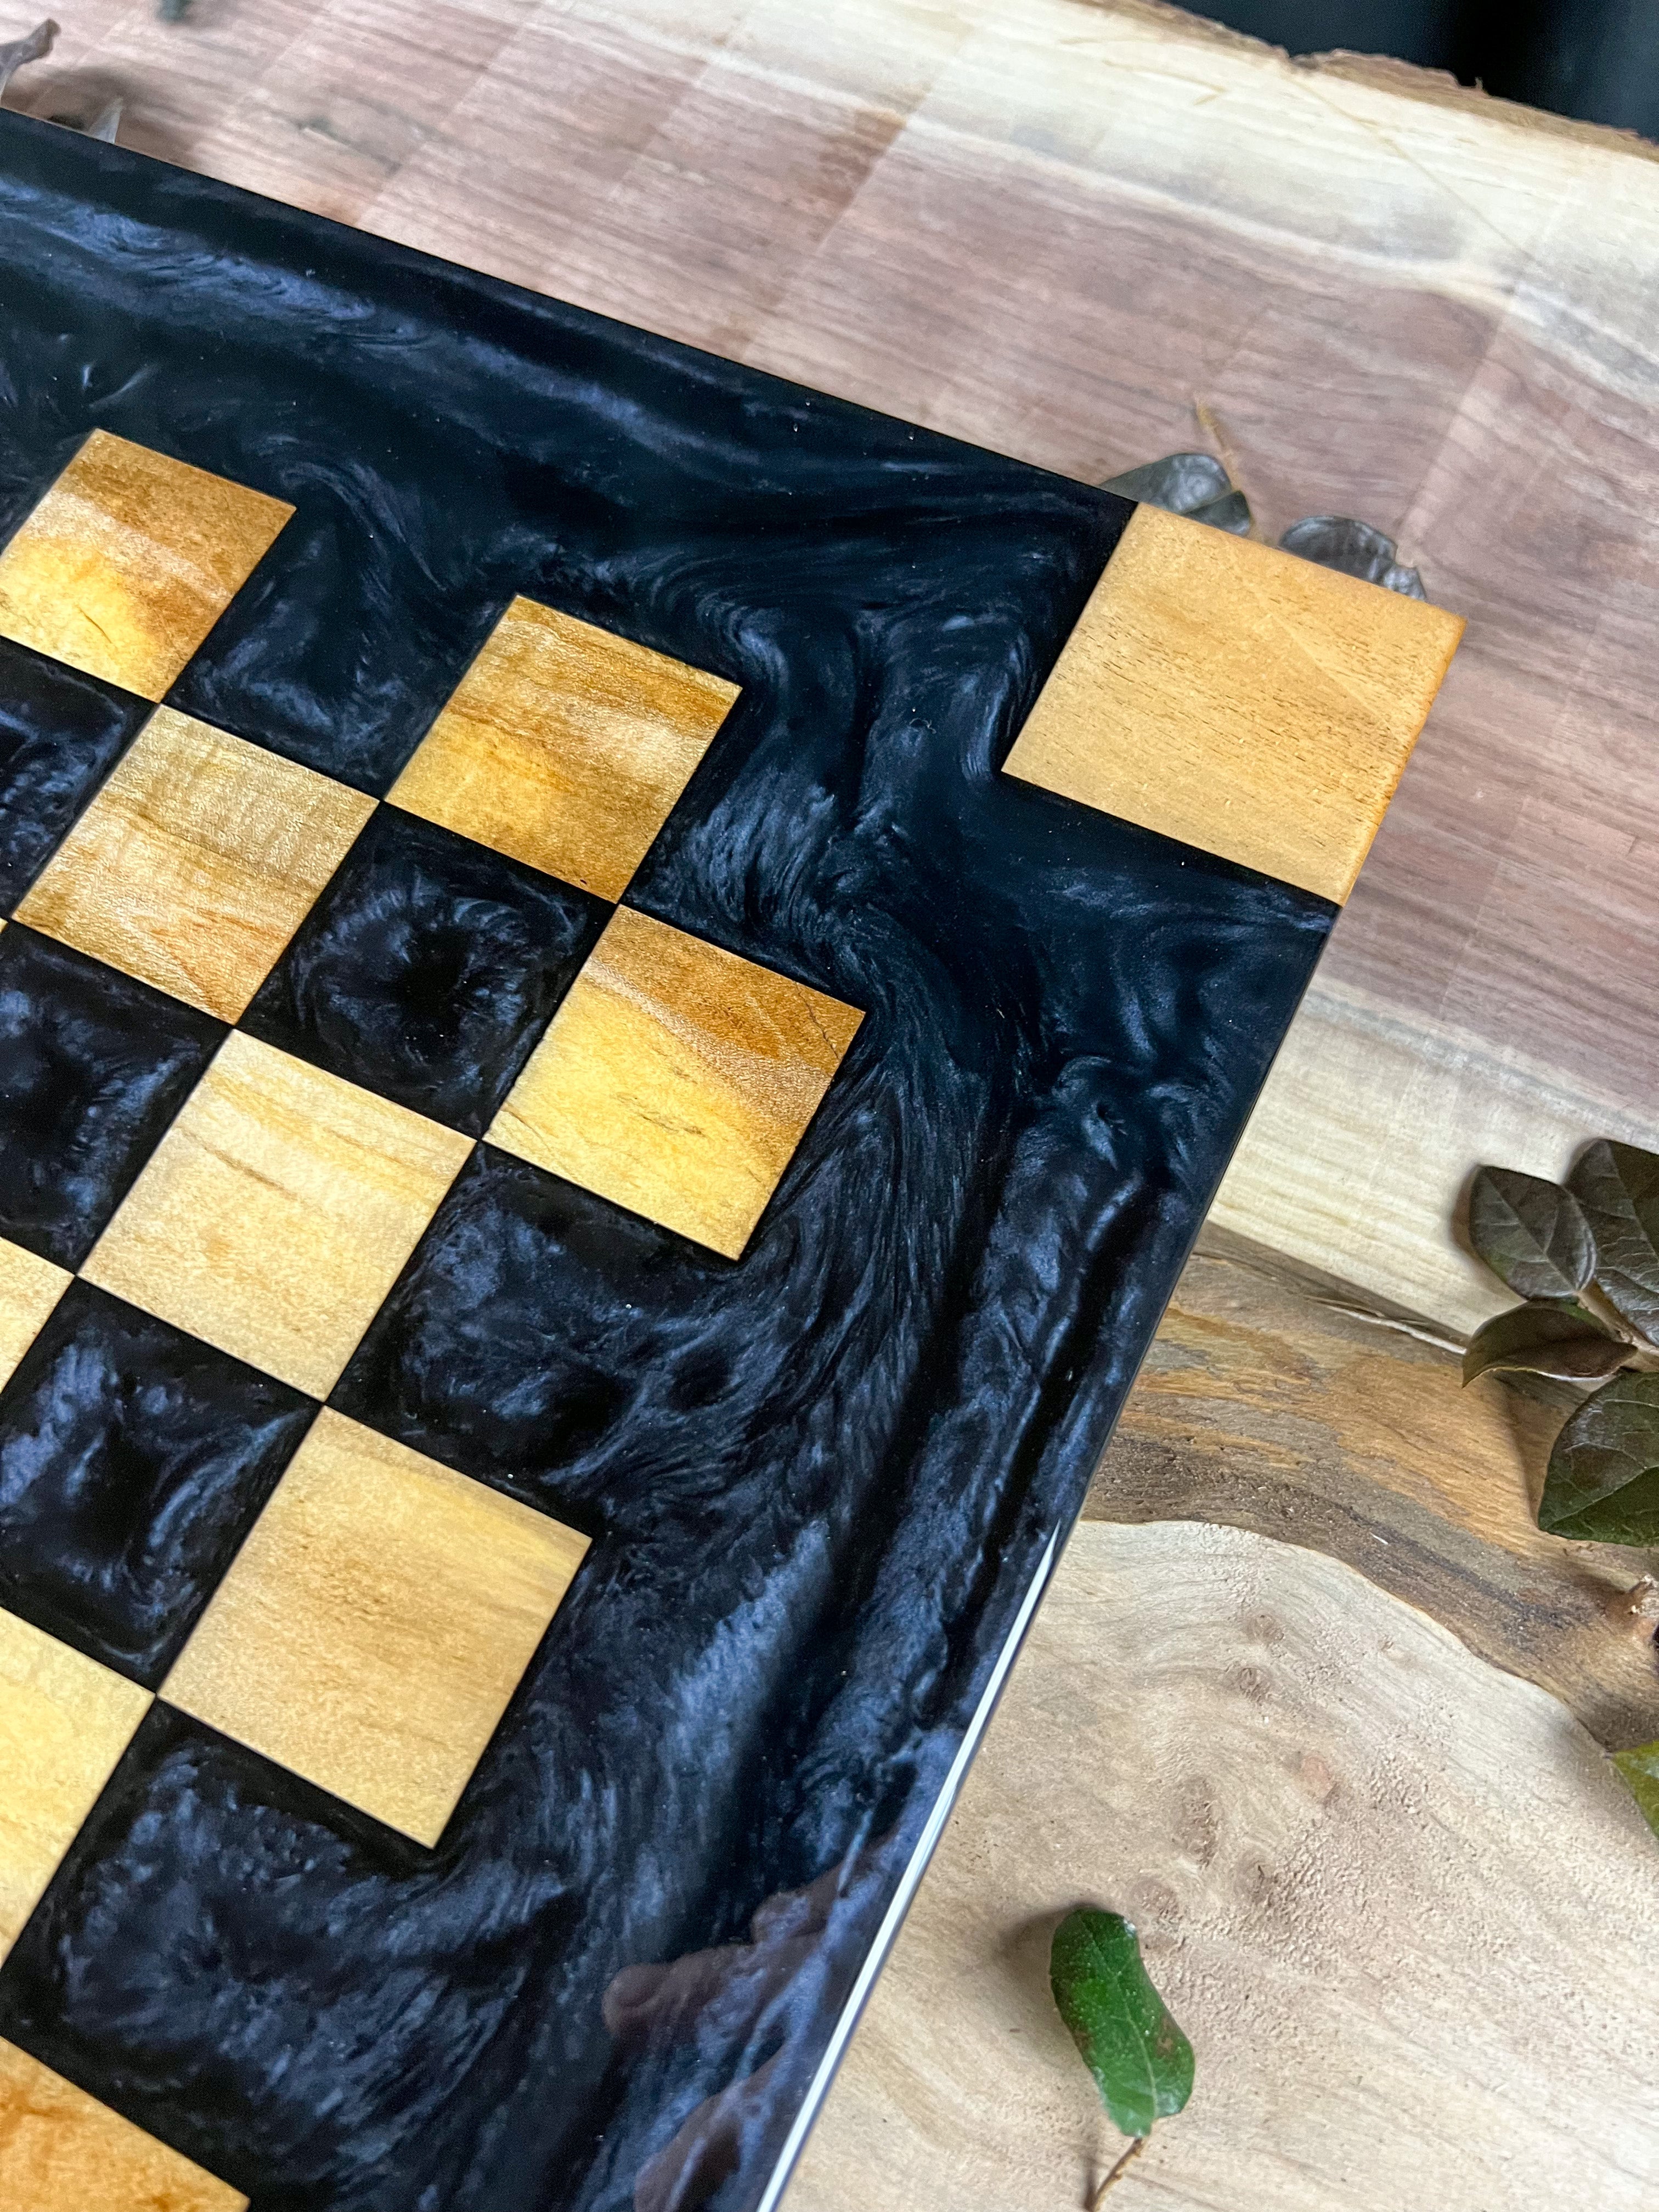 Maple Wood Black Onyx Chess Board